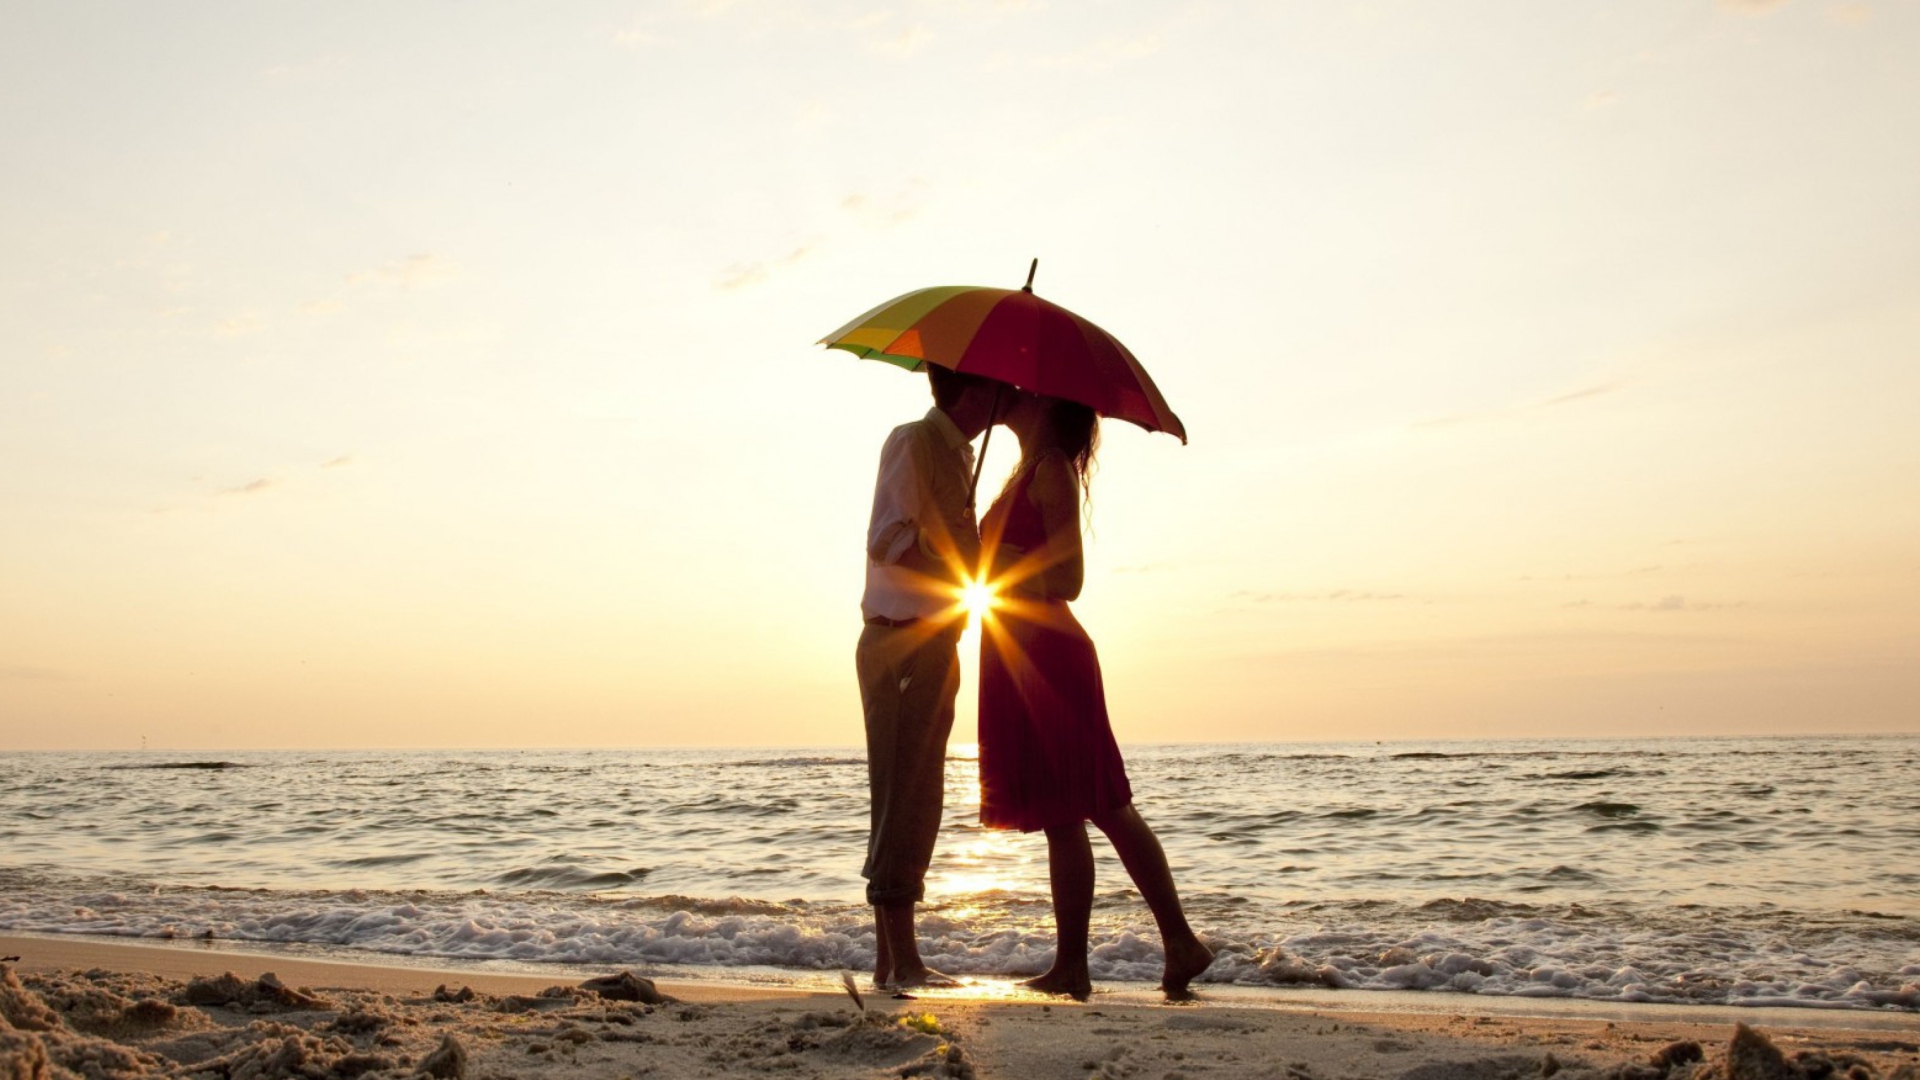 Обои Couple Kissing Under Umbrella At Sunset On Beach 1920x1080